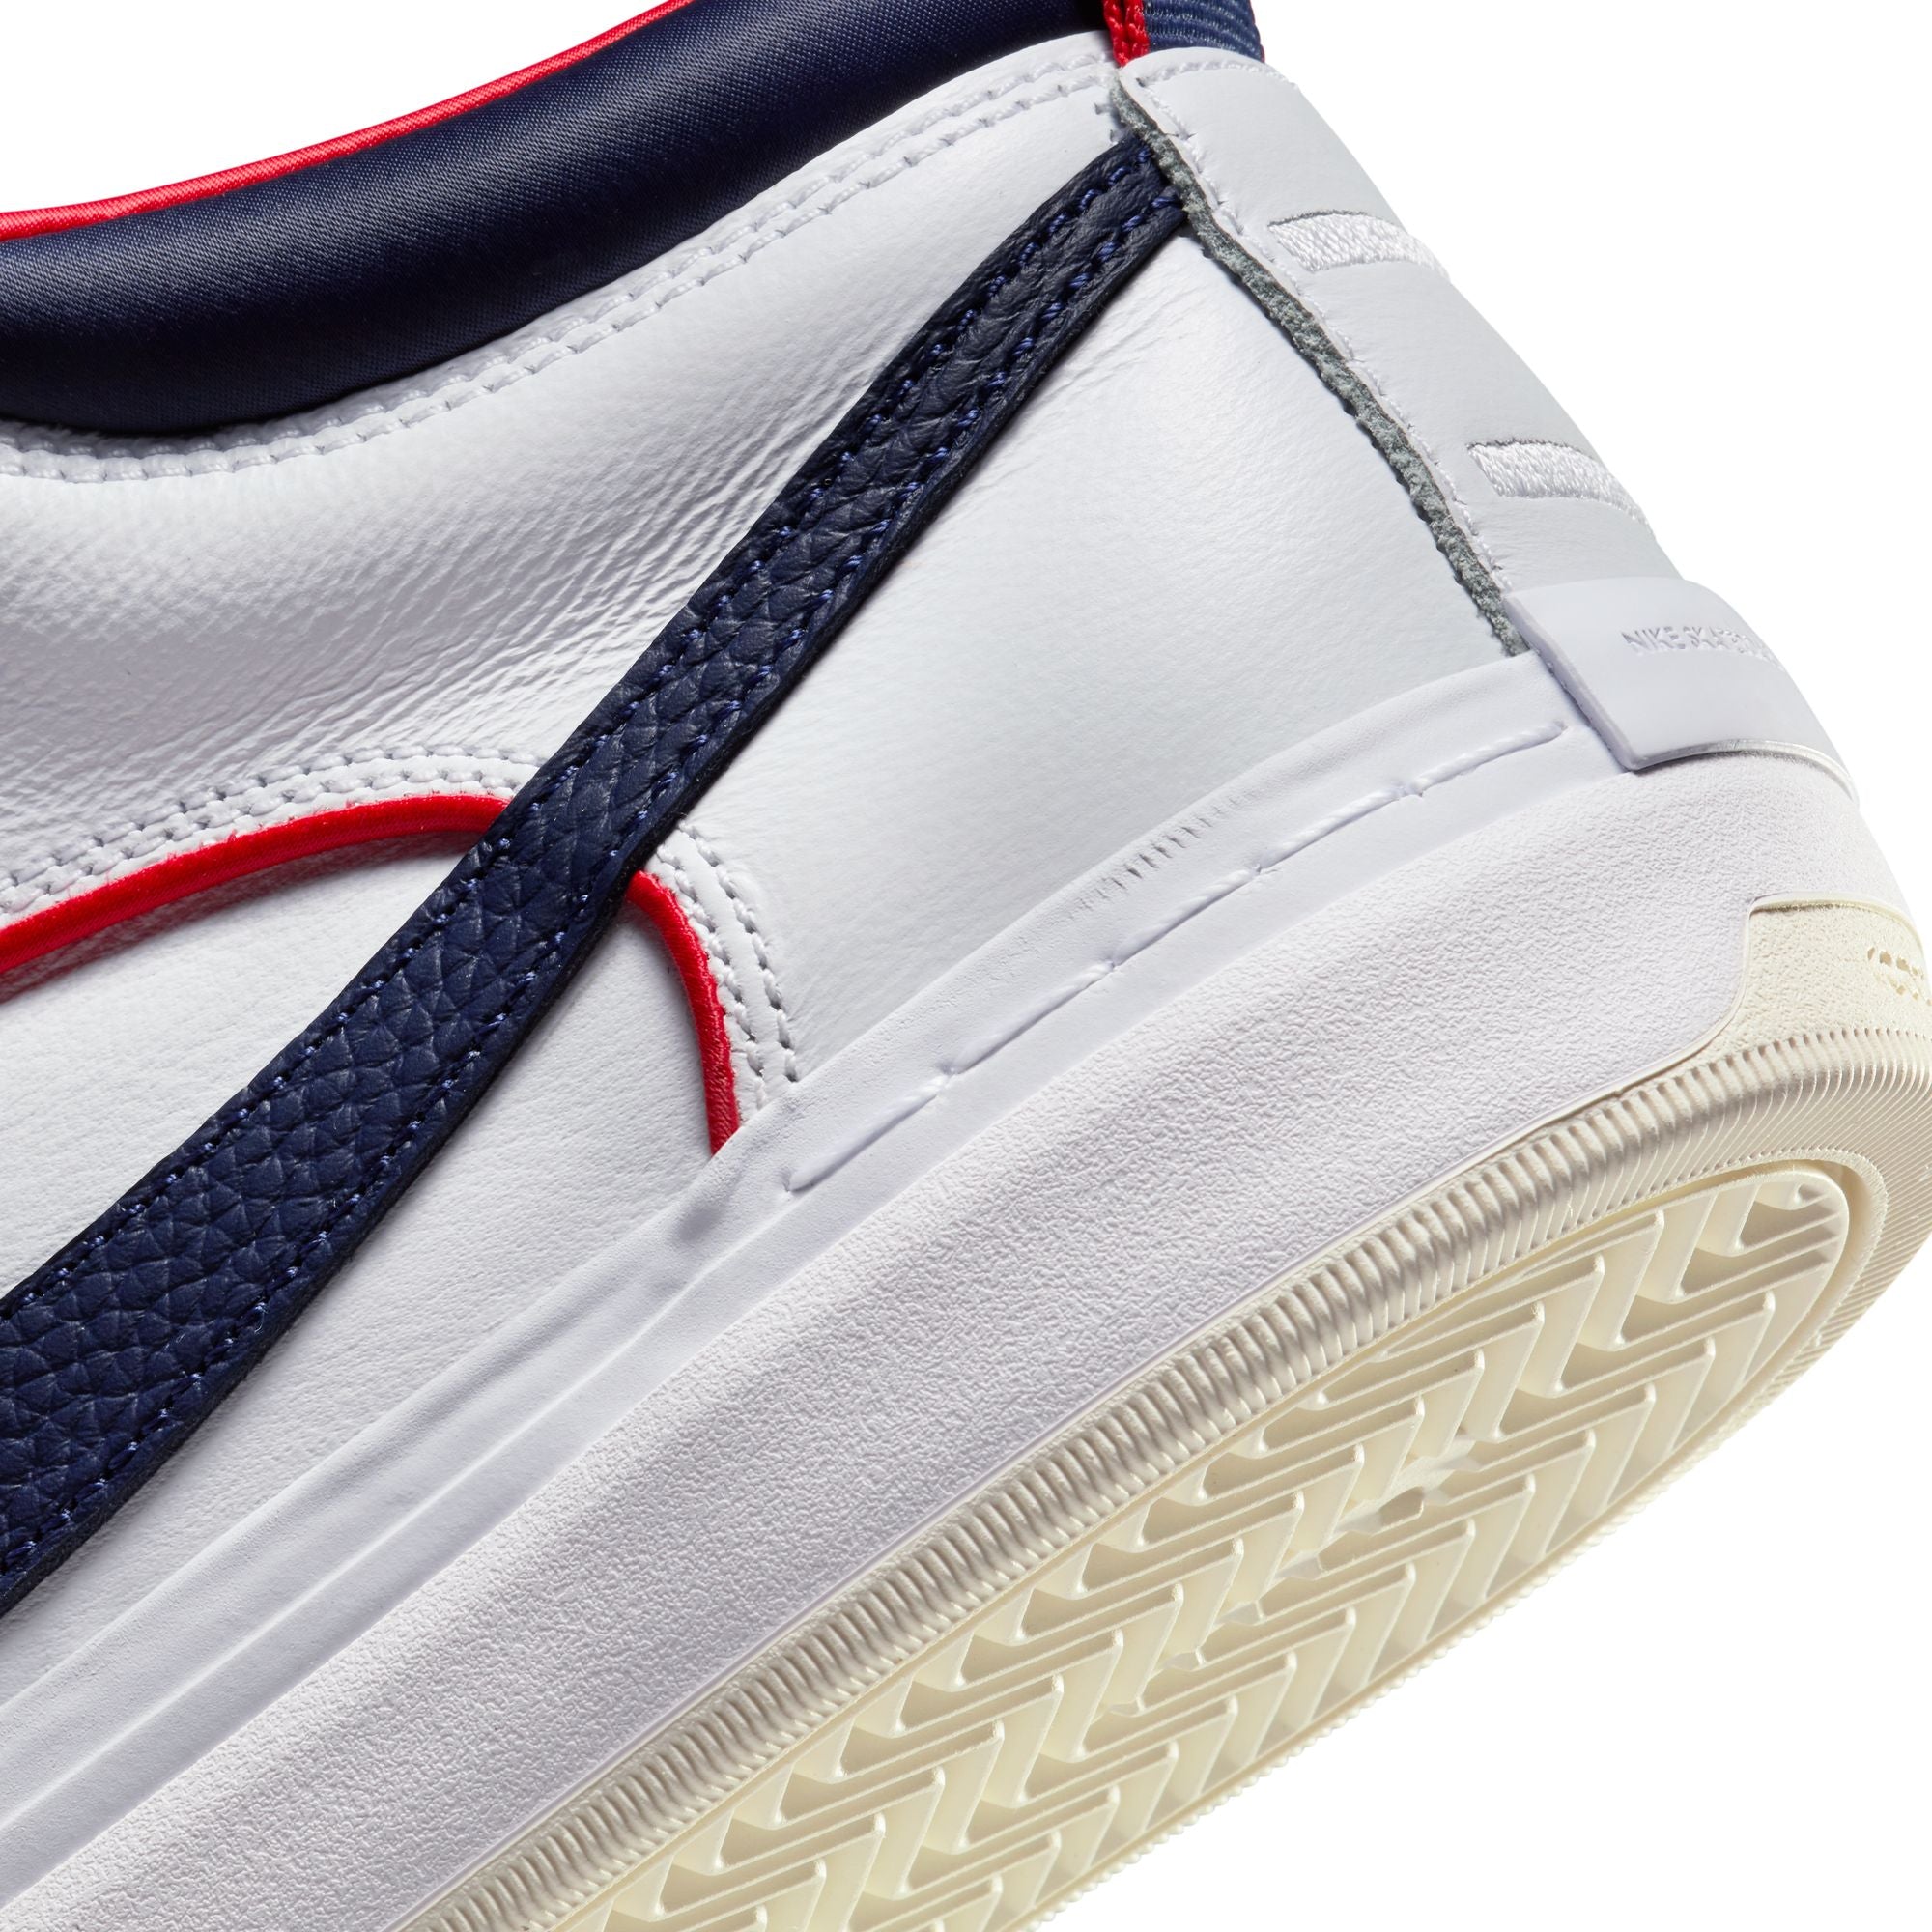 Nike SB Leo Baker React Premium Shoes - White/Midnight Navy-University Red-White